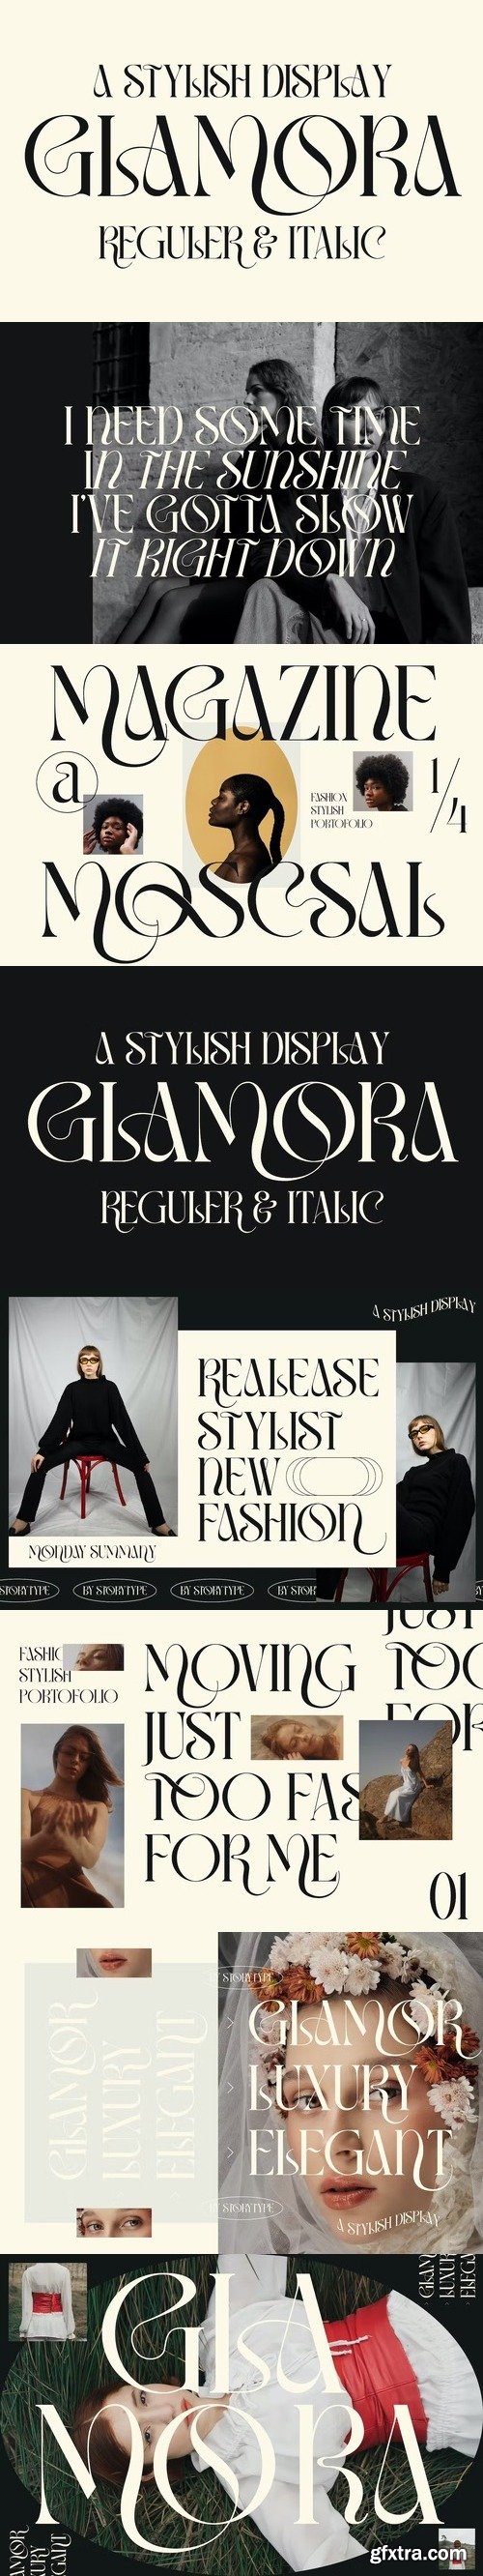 Glamora stylish display font